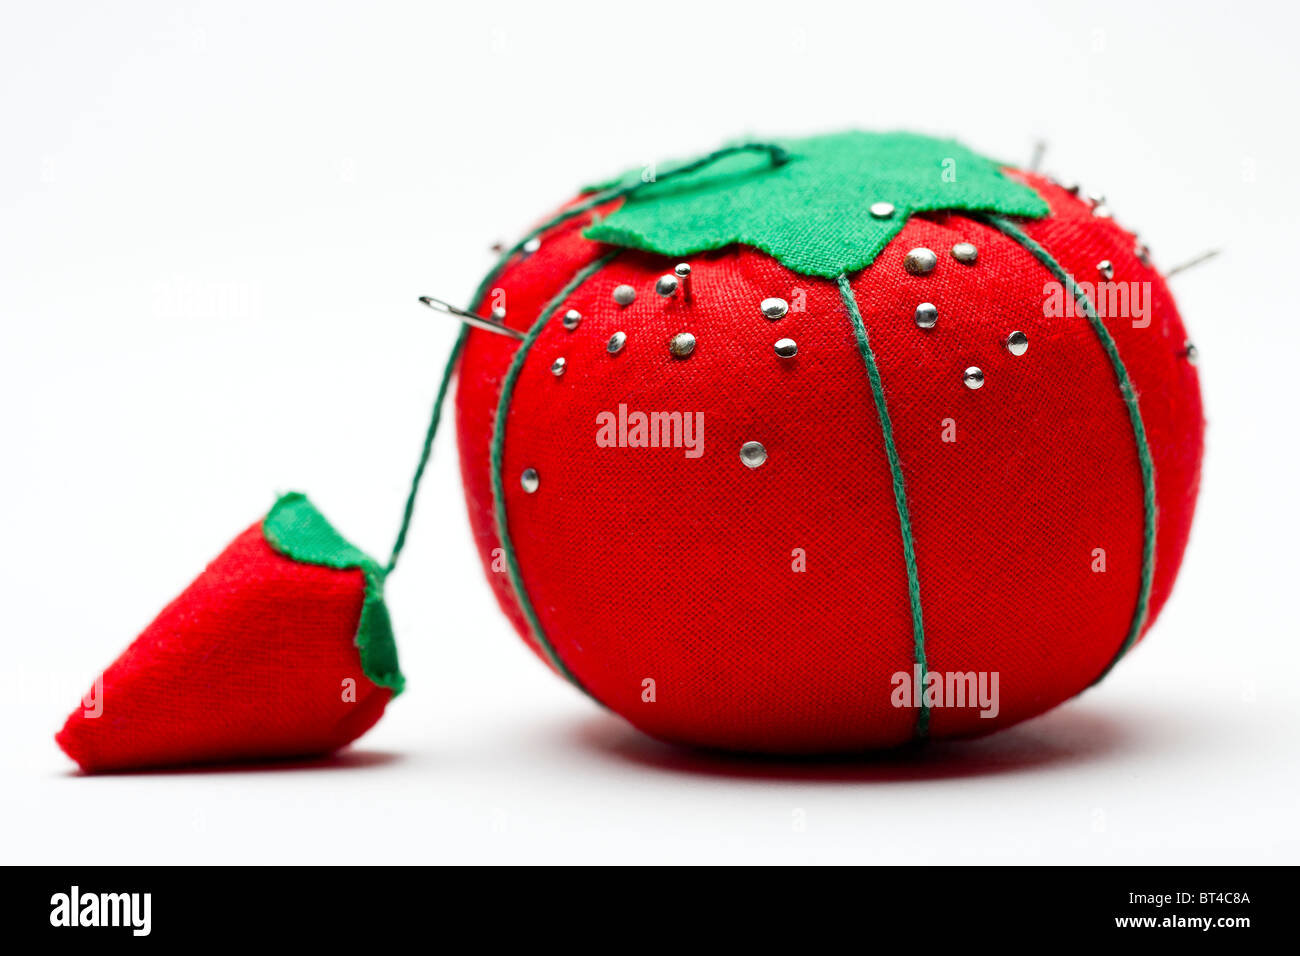 Tomato Sewing Pin Cushion stock photo. Image of darning - 44537648